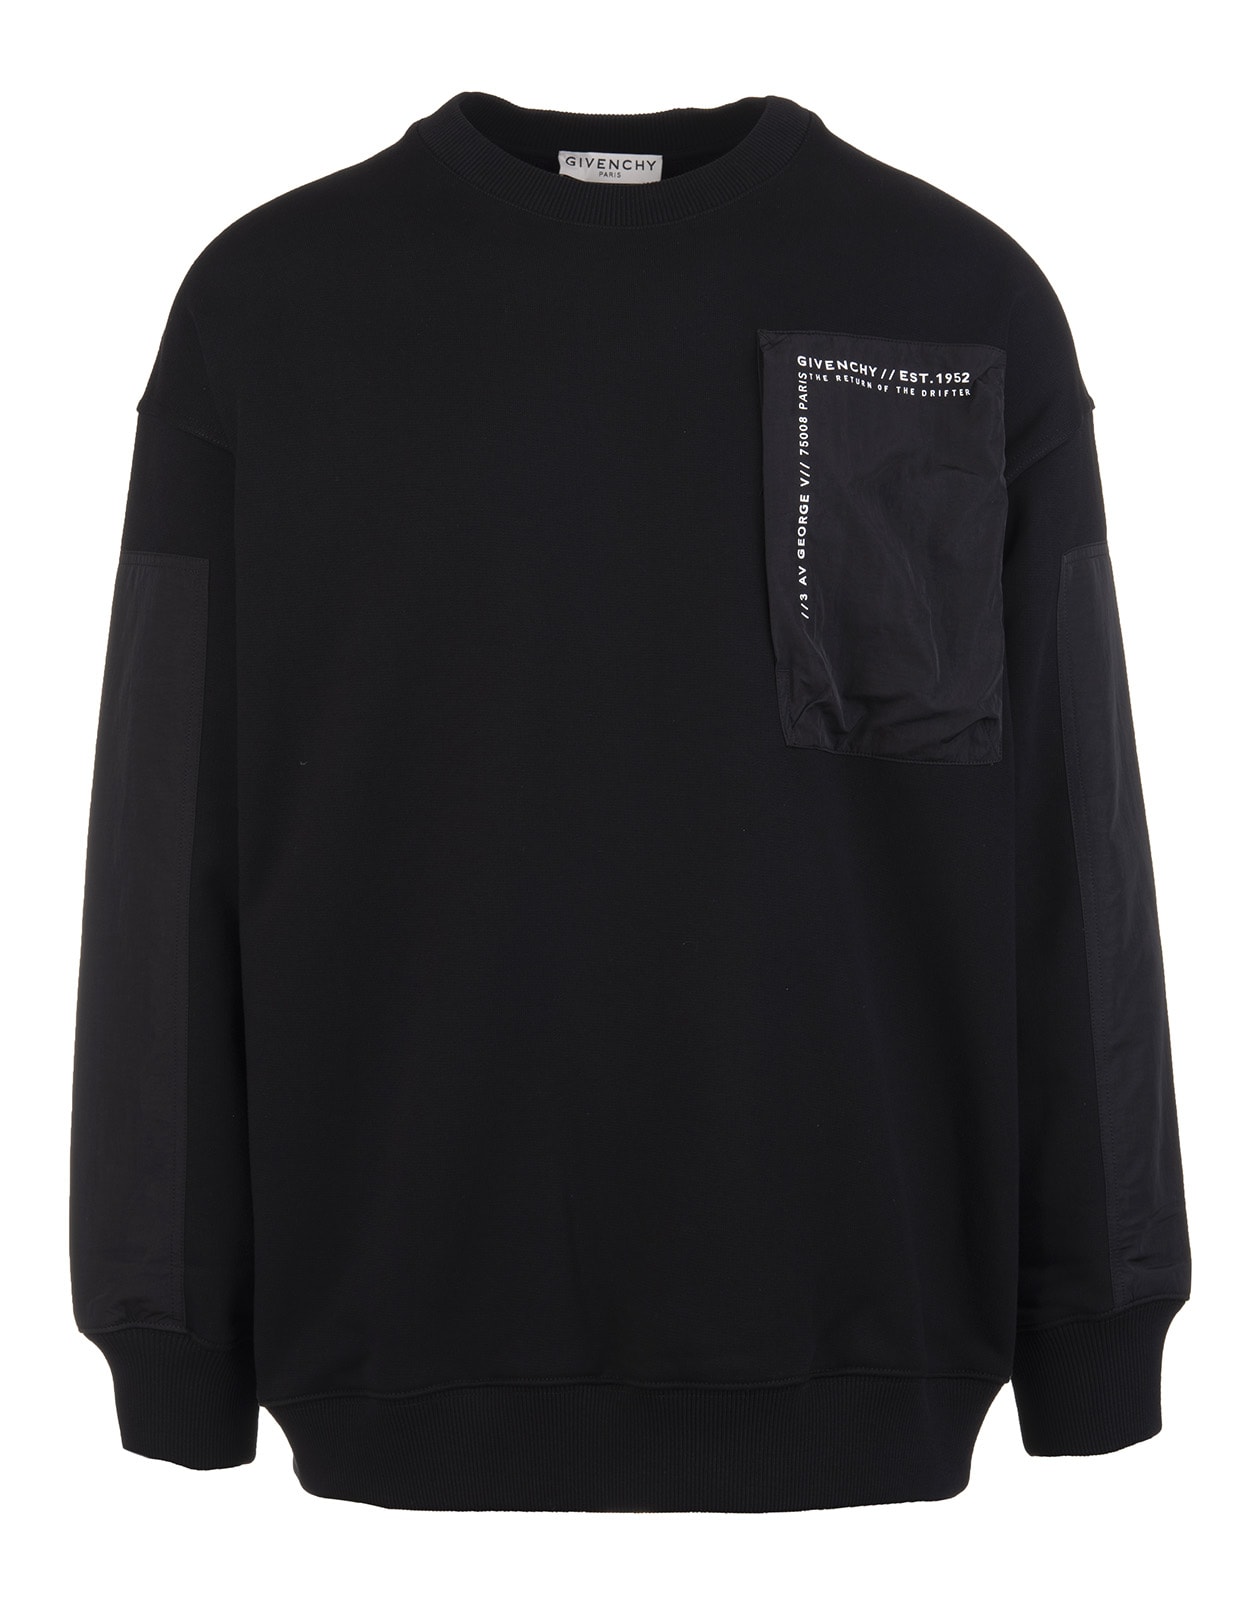 Man Black Bimaterial Givenchy Sweatshirt